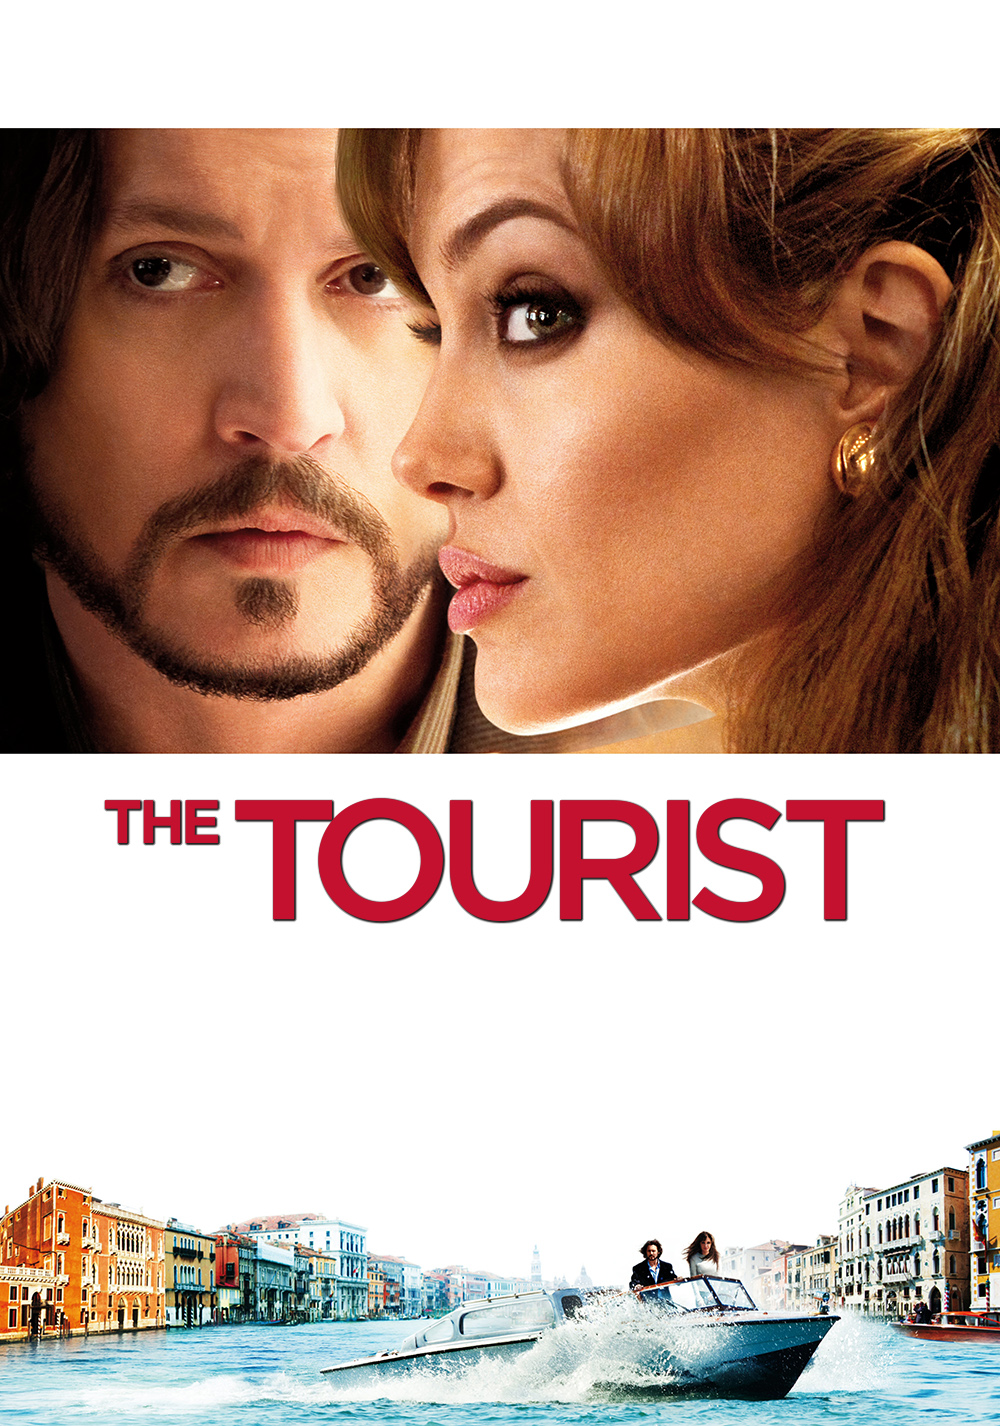 tourist resort movie